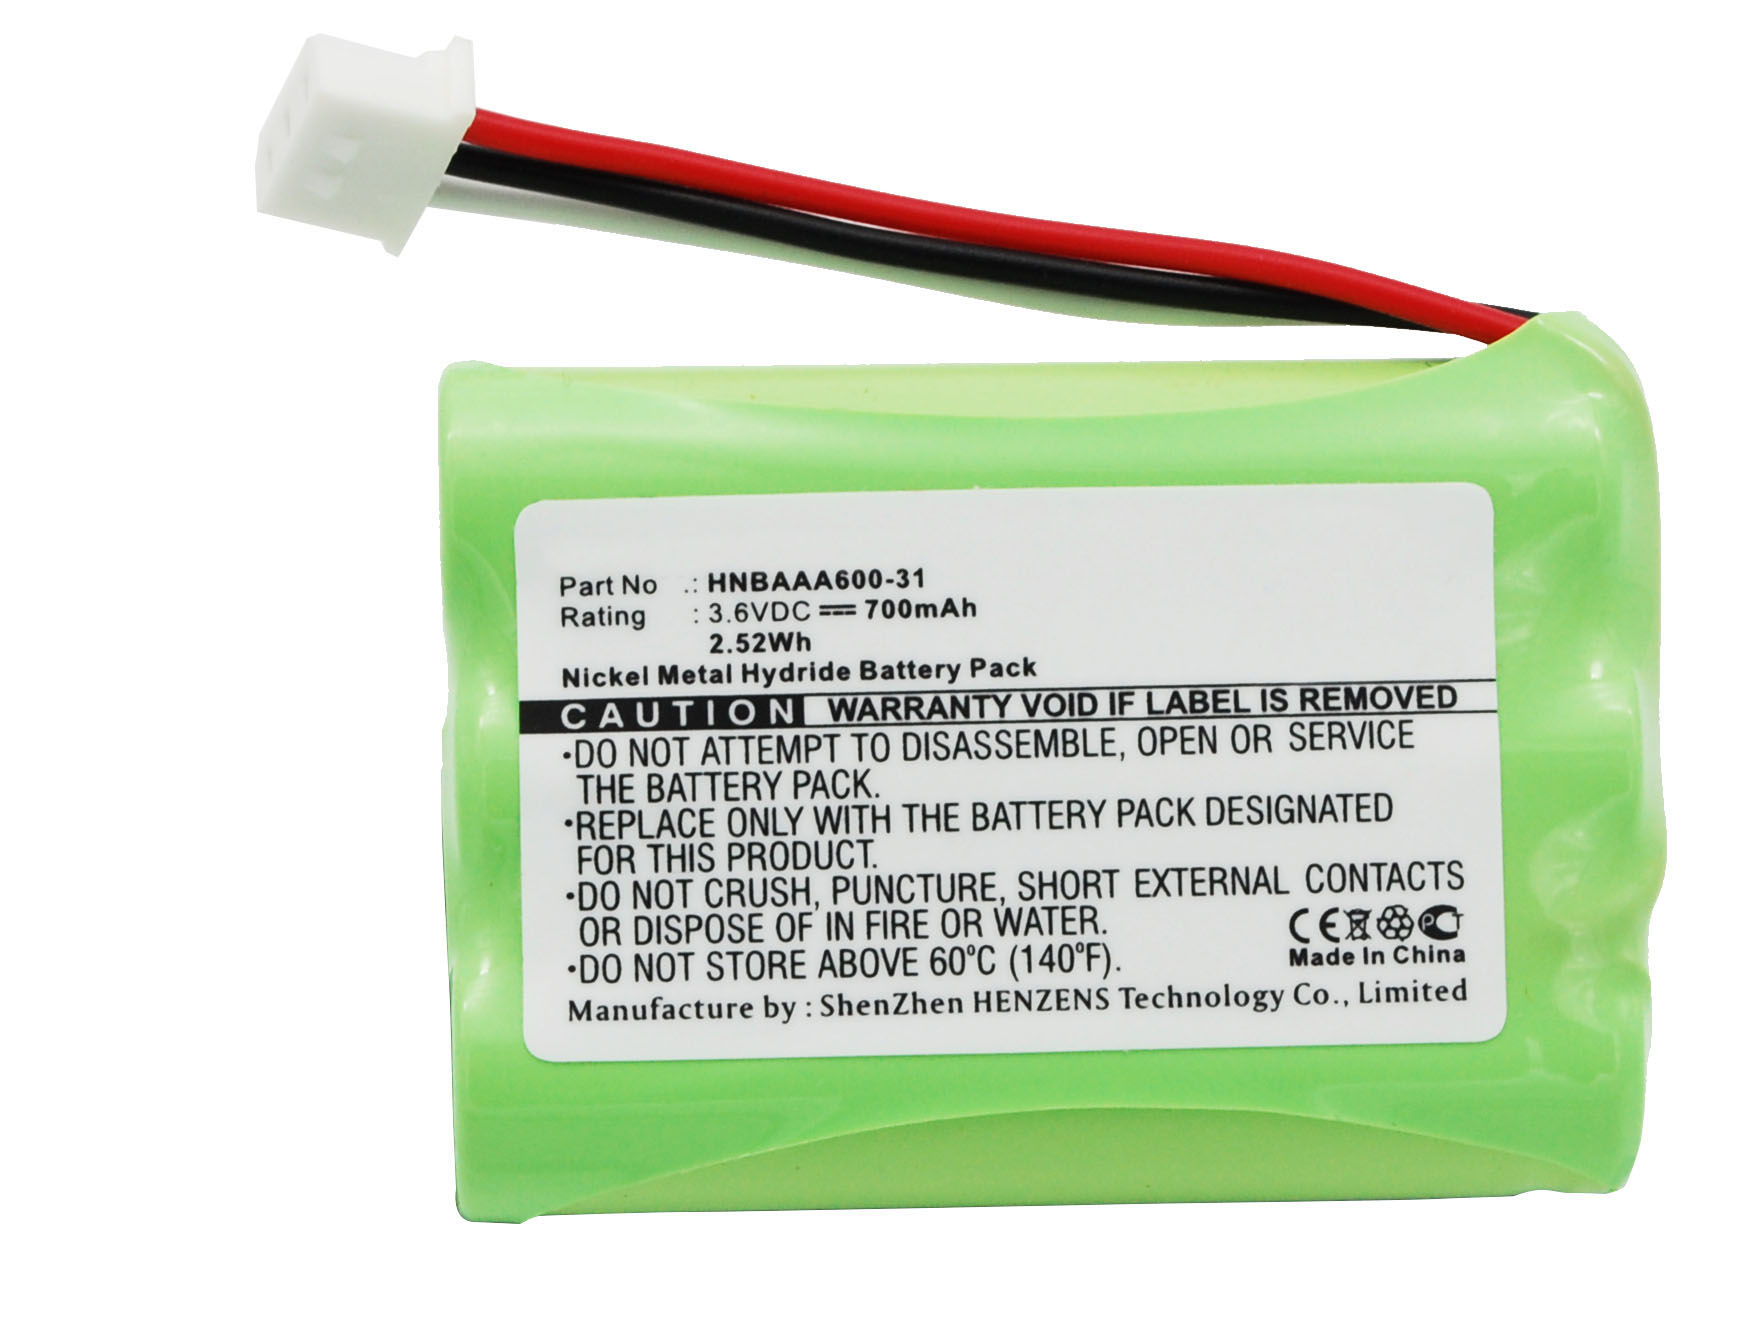 Synergy Digital Battery Compatible With Huawei HNBAAA600-31 Cordless Phone Battery - (Ni-MH, 3.6V, 700 mAh)